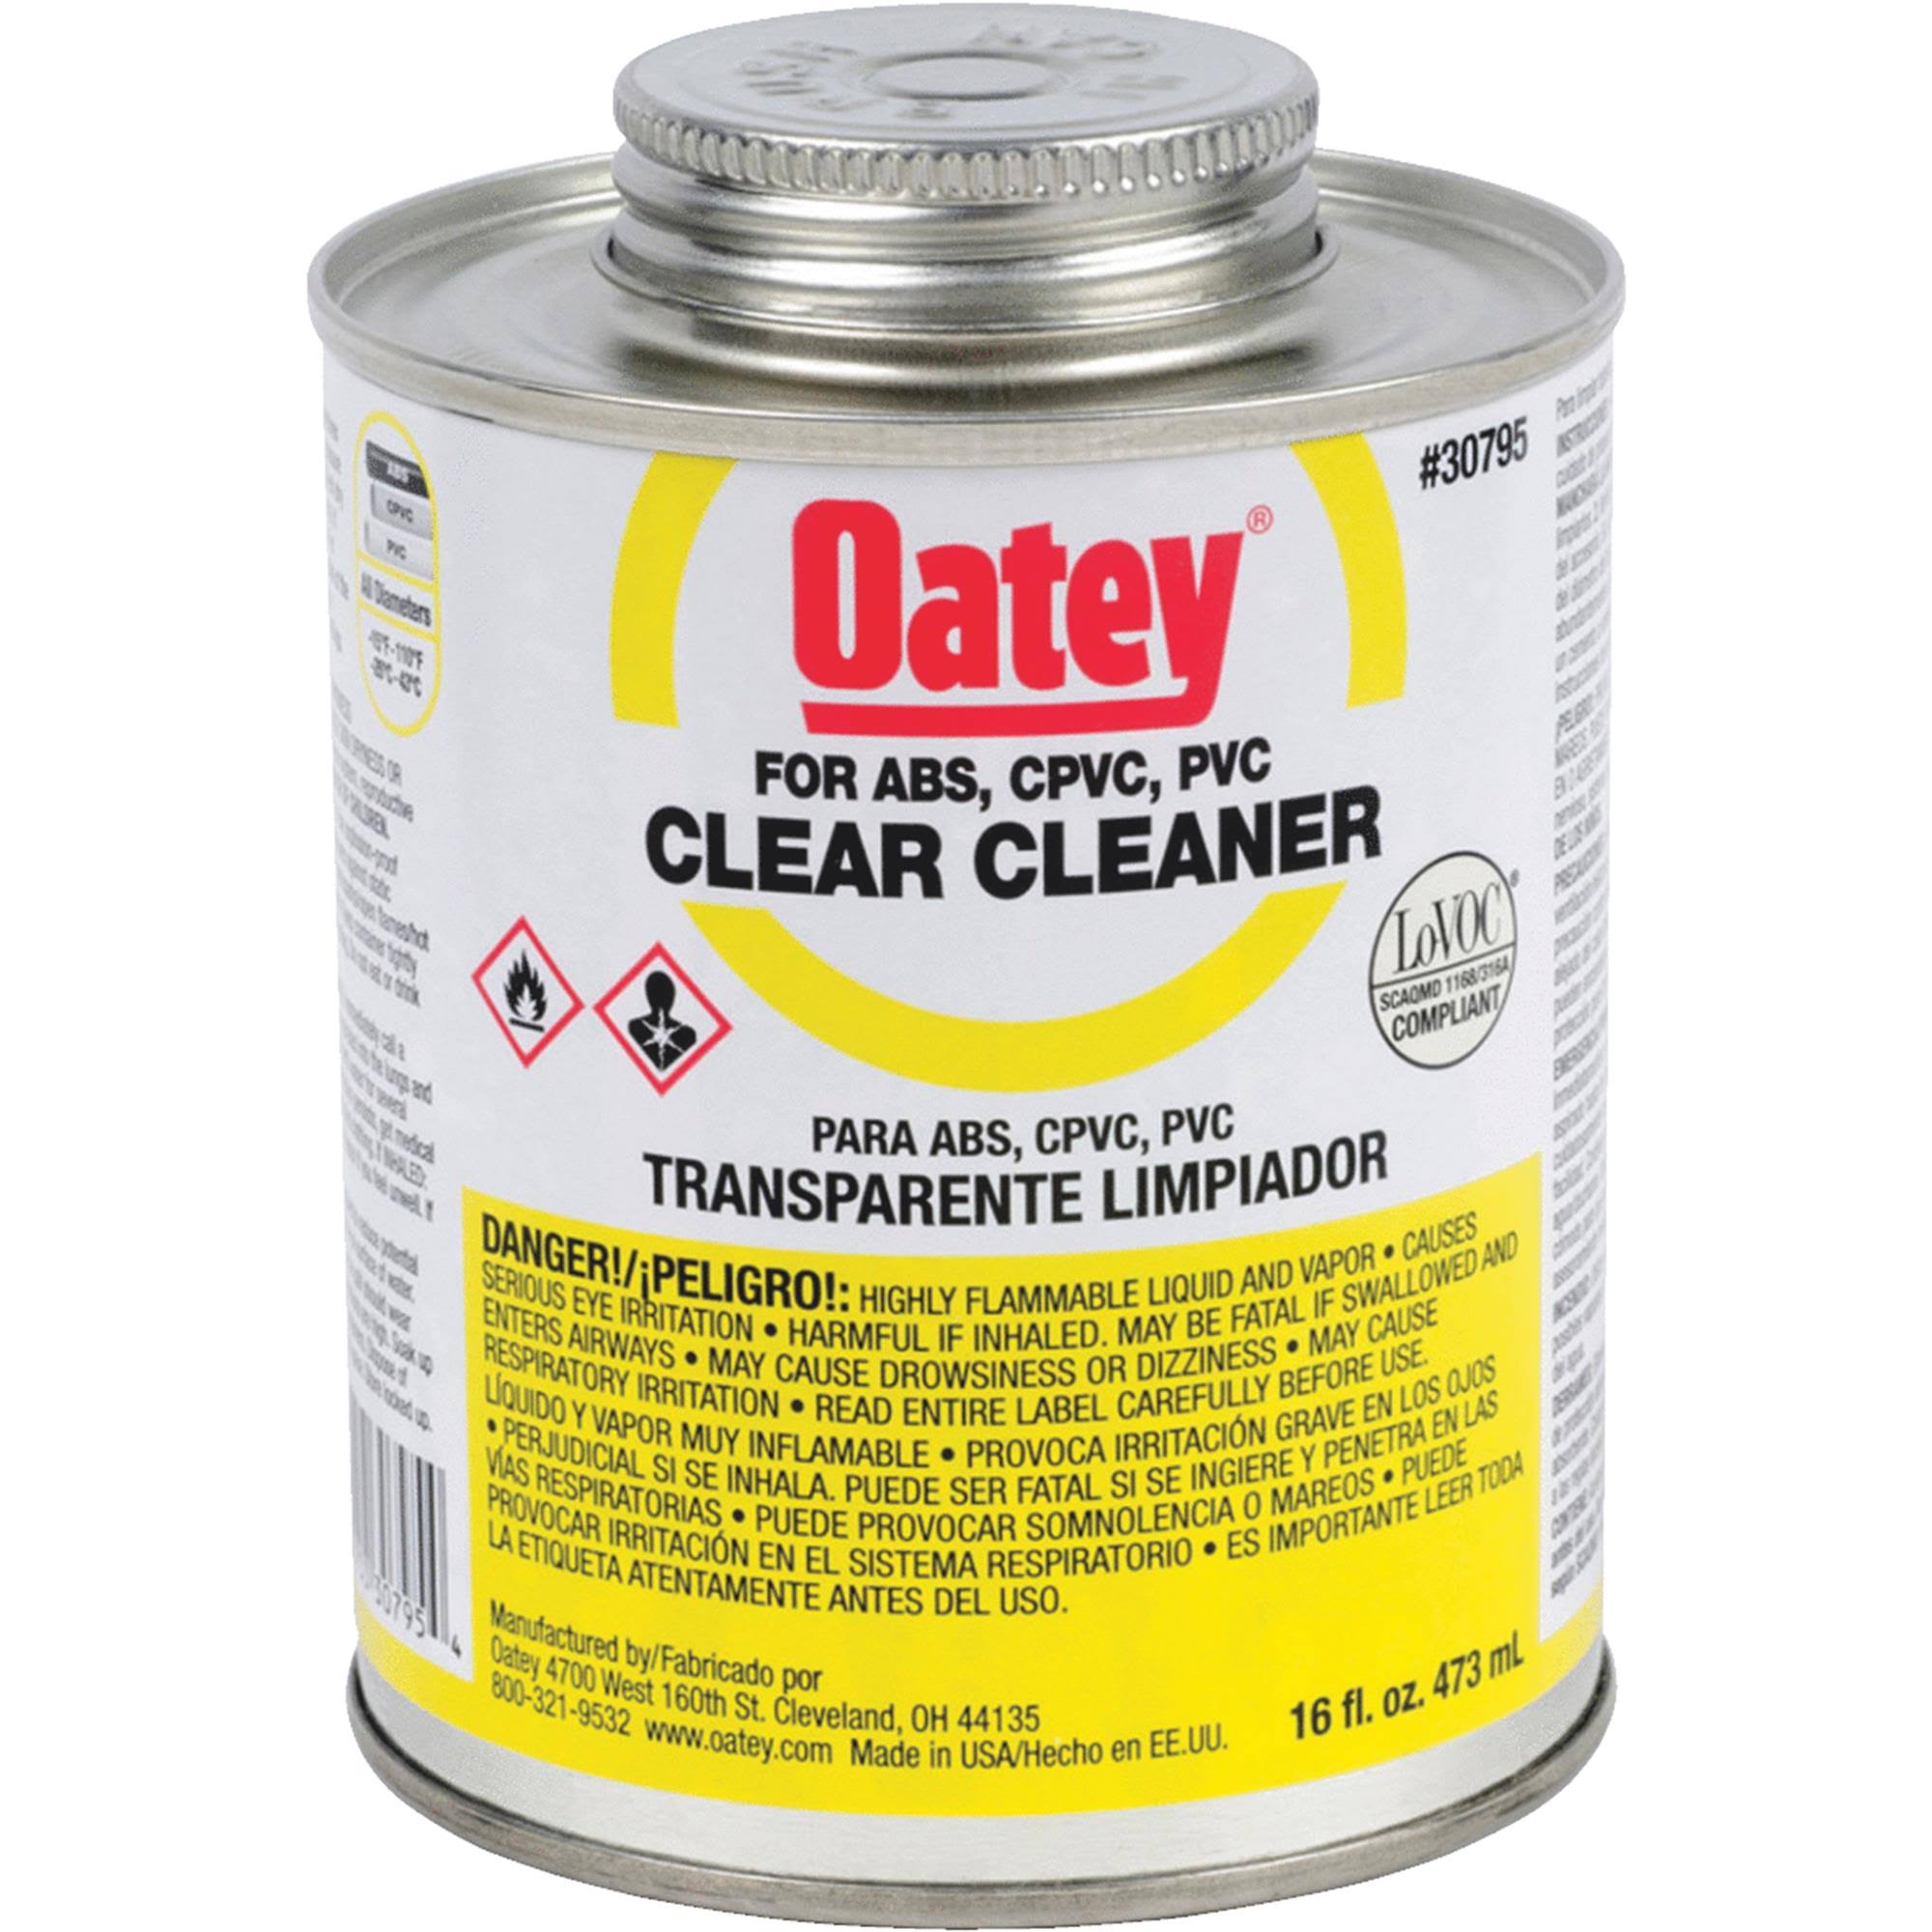 Oatey PVC Clear Cleaner - 473ml